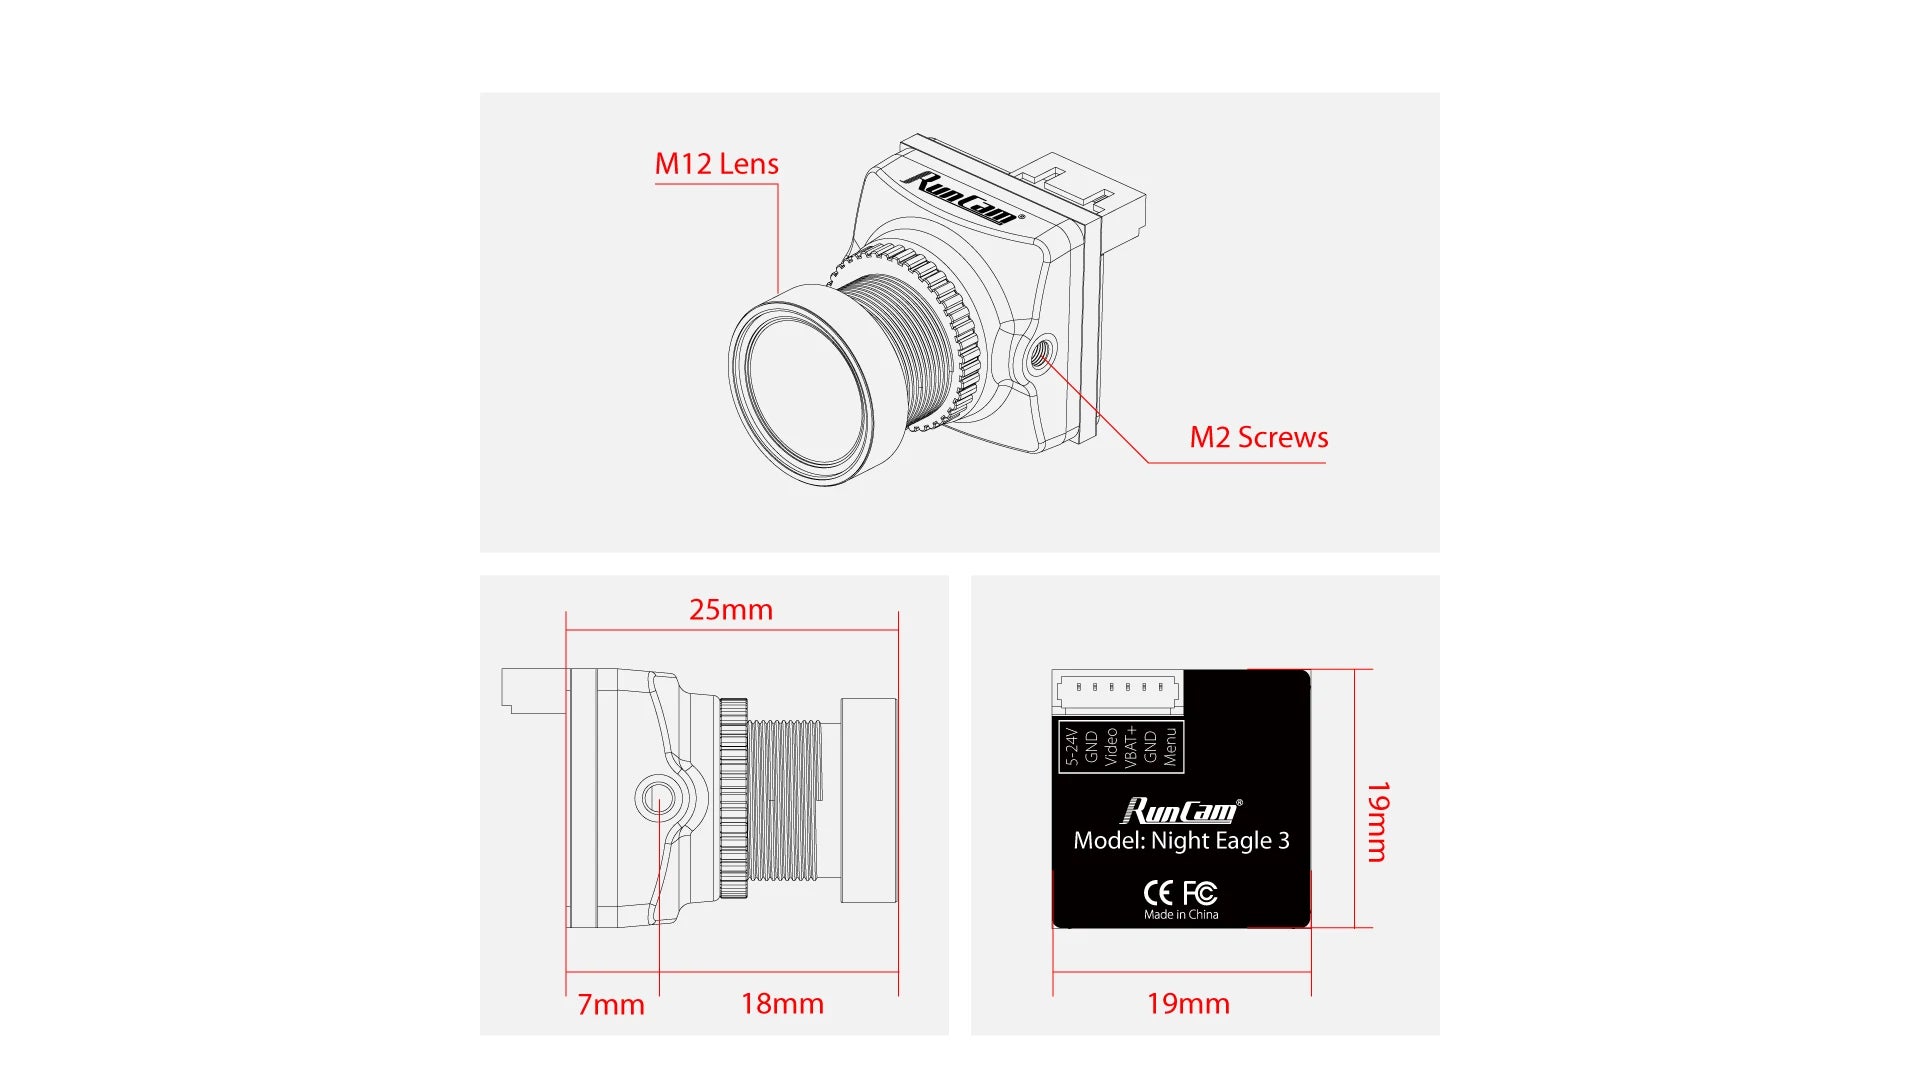 RunCam NightEagle 3 Analog Camera, M12 Lens M2 Screws 25mm 388582 Modekwightiagle